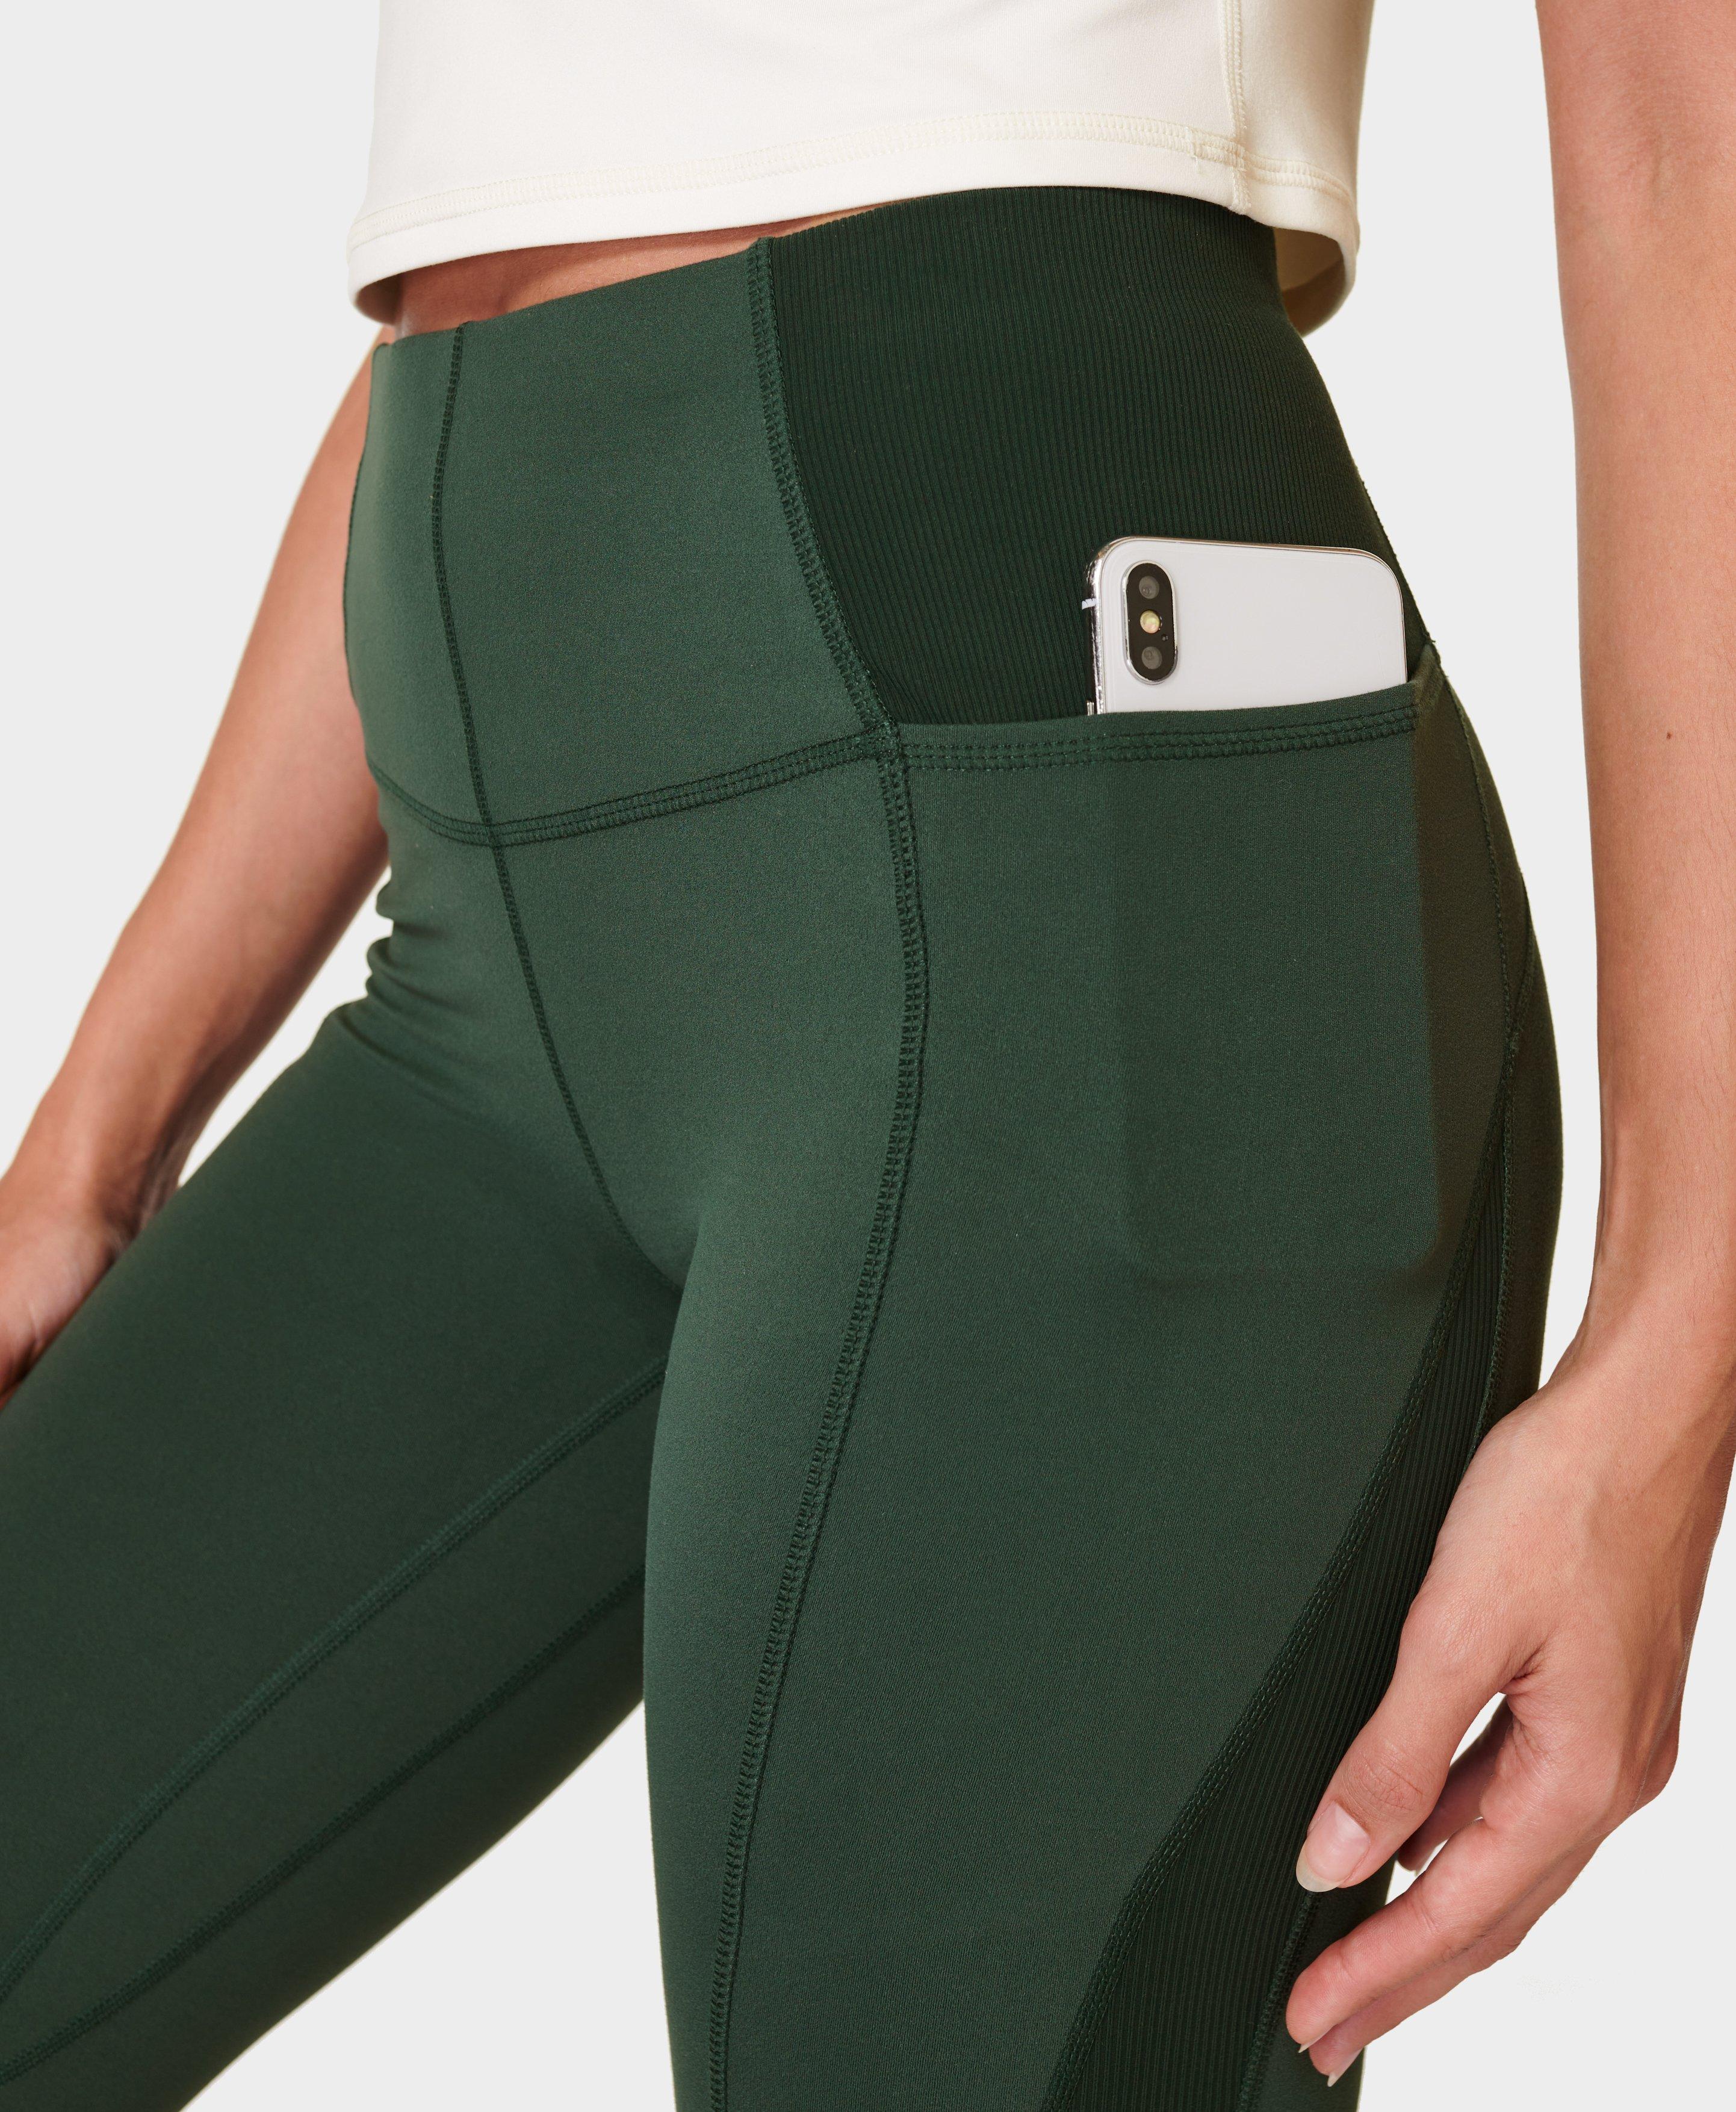 NancyBrandy High Waist Spandex Leggings Stretch Pants - Green in